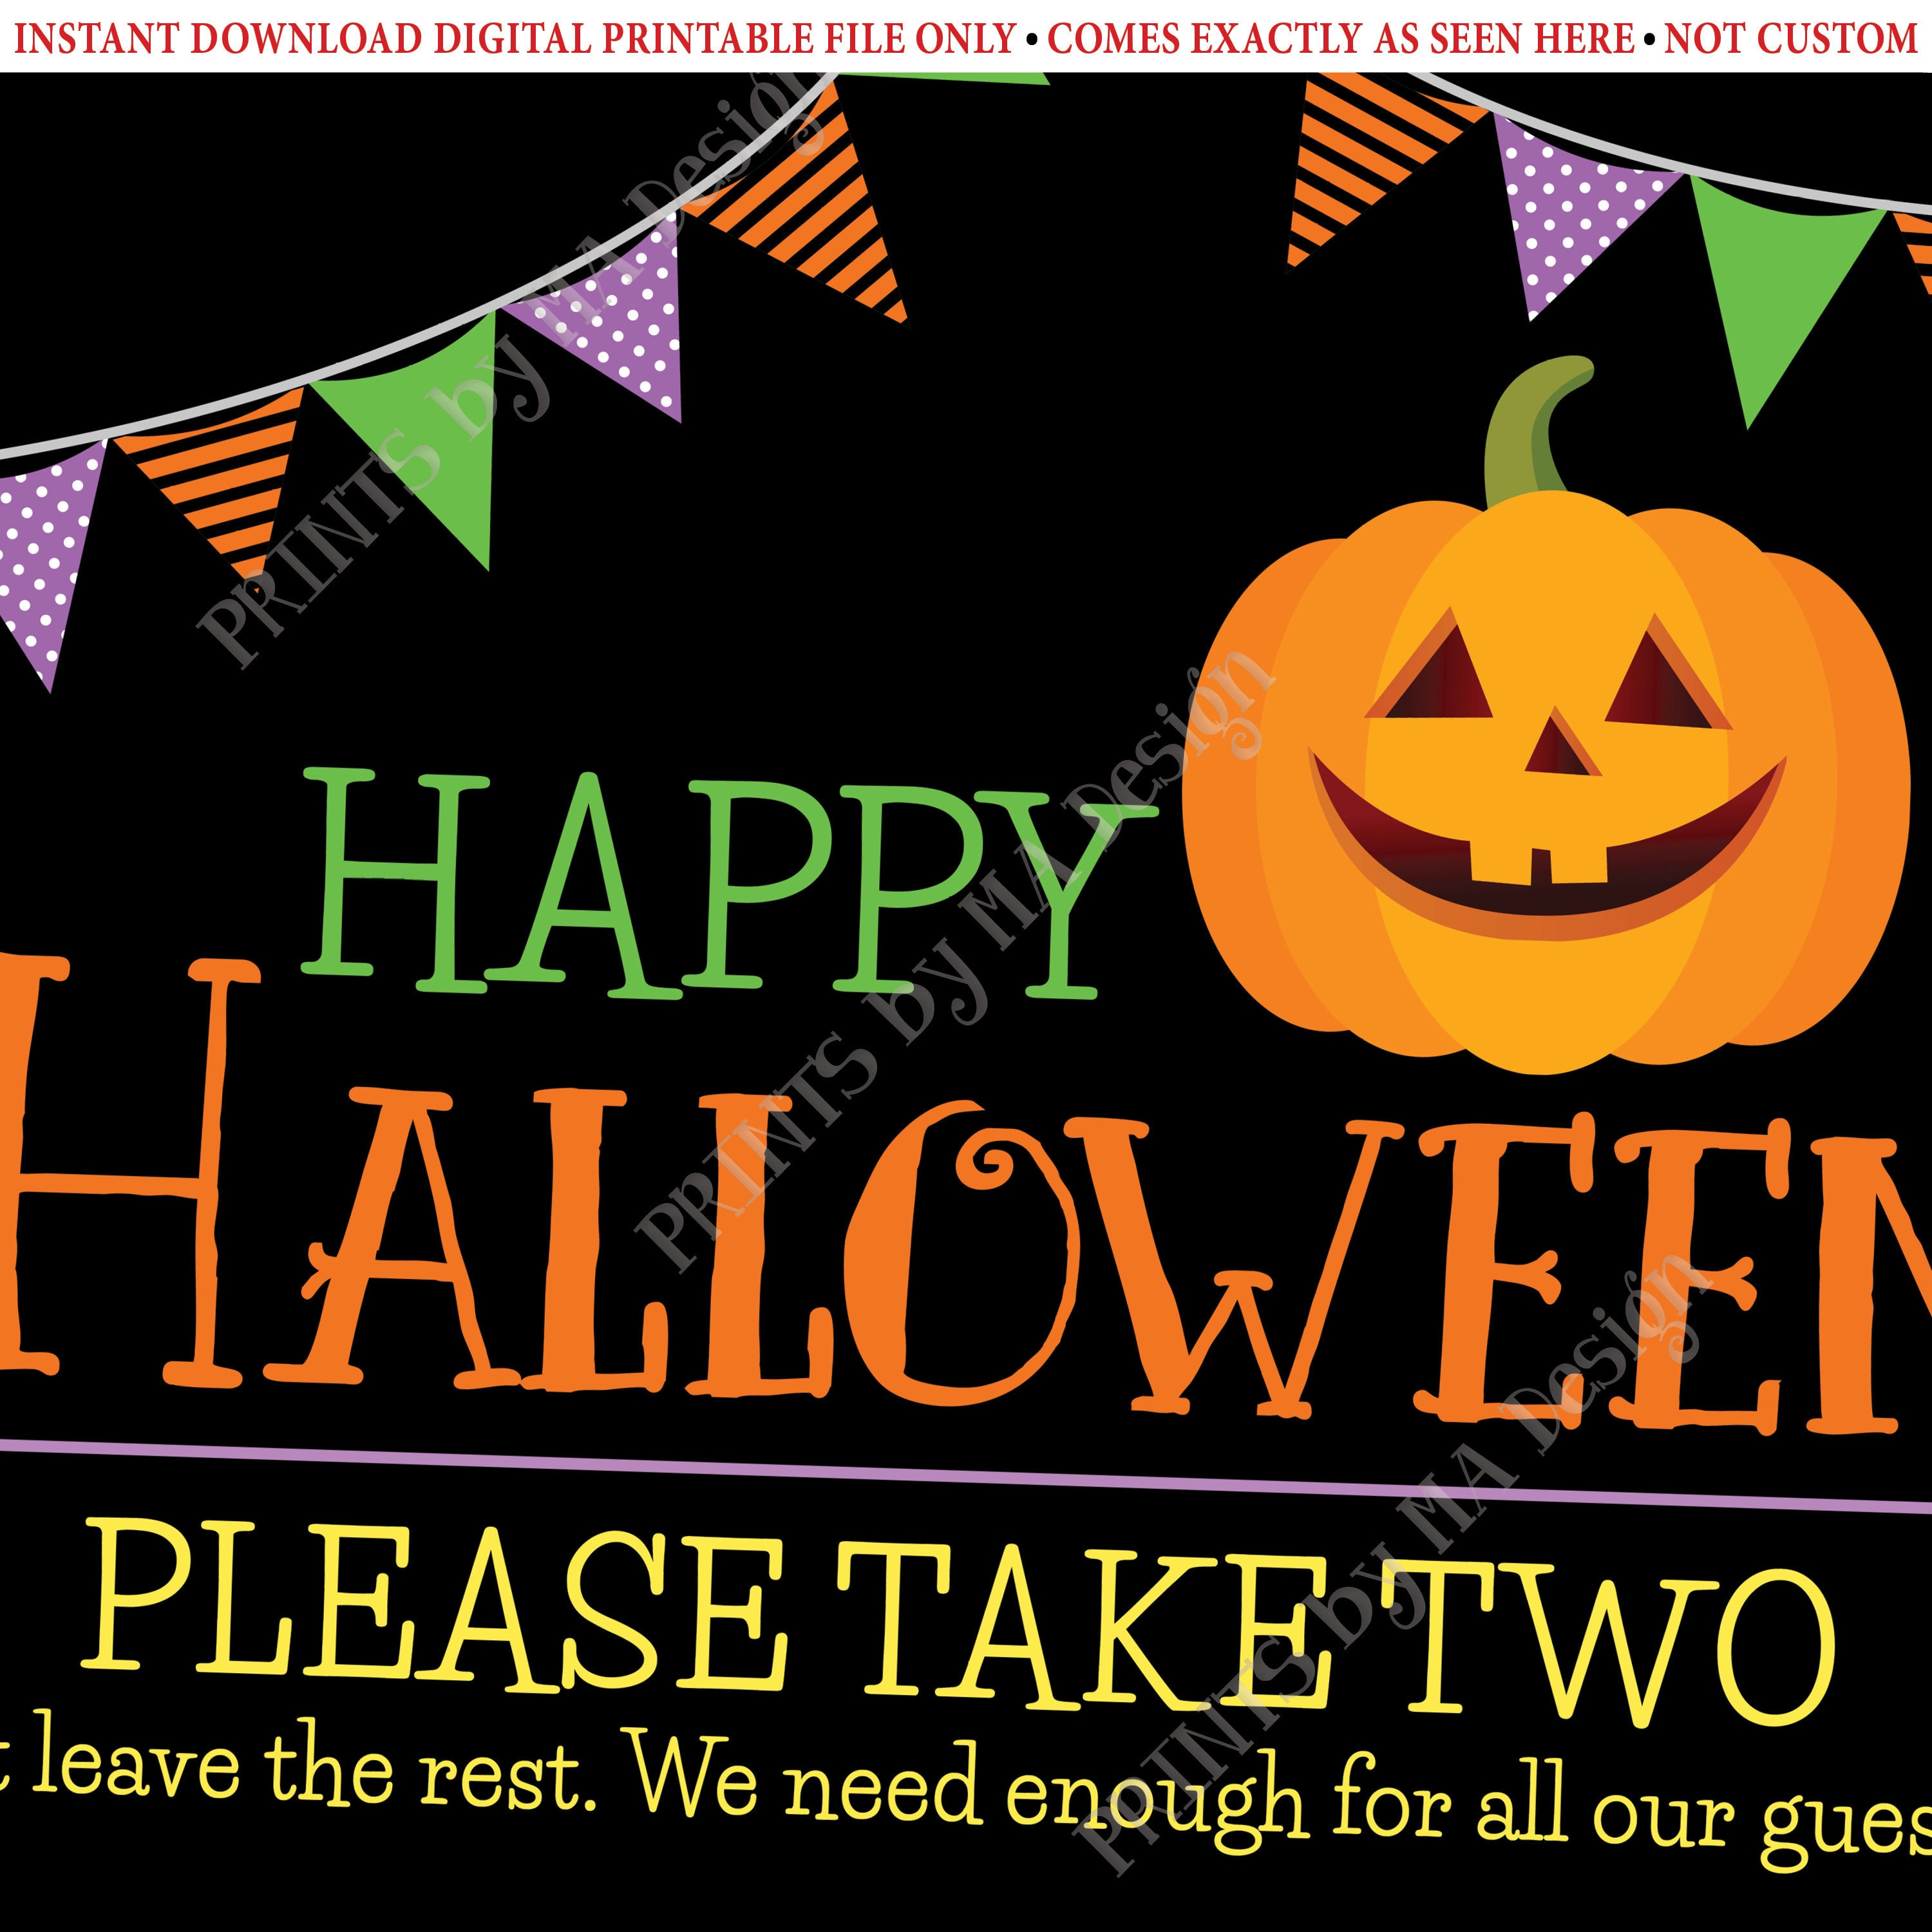 Happy Halloween Candy Sign, Please Take Two Treats, JackOLantern